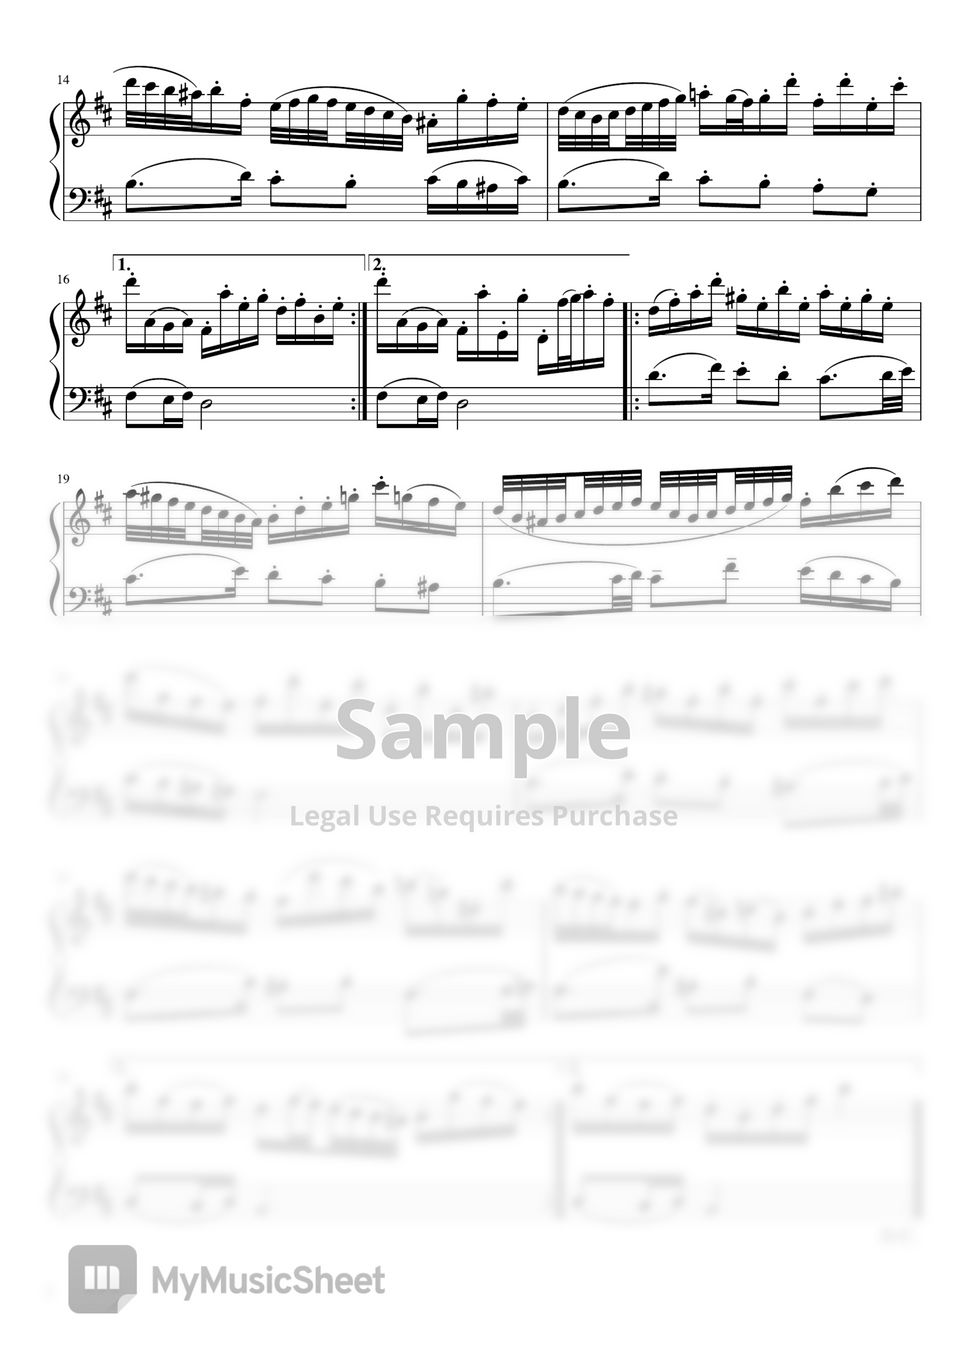 J.s.Bach - Orchestra suite Ⅱ BWV1067 "Polonase" (Bm Pianosolo Intermediate to advance) by pfkaori